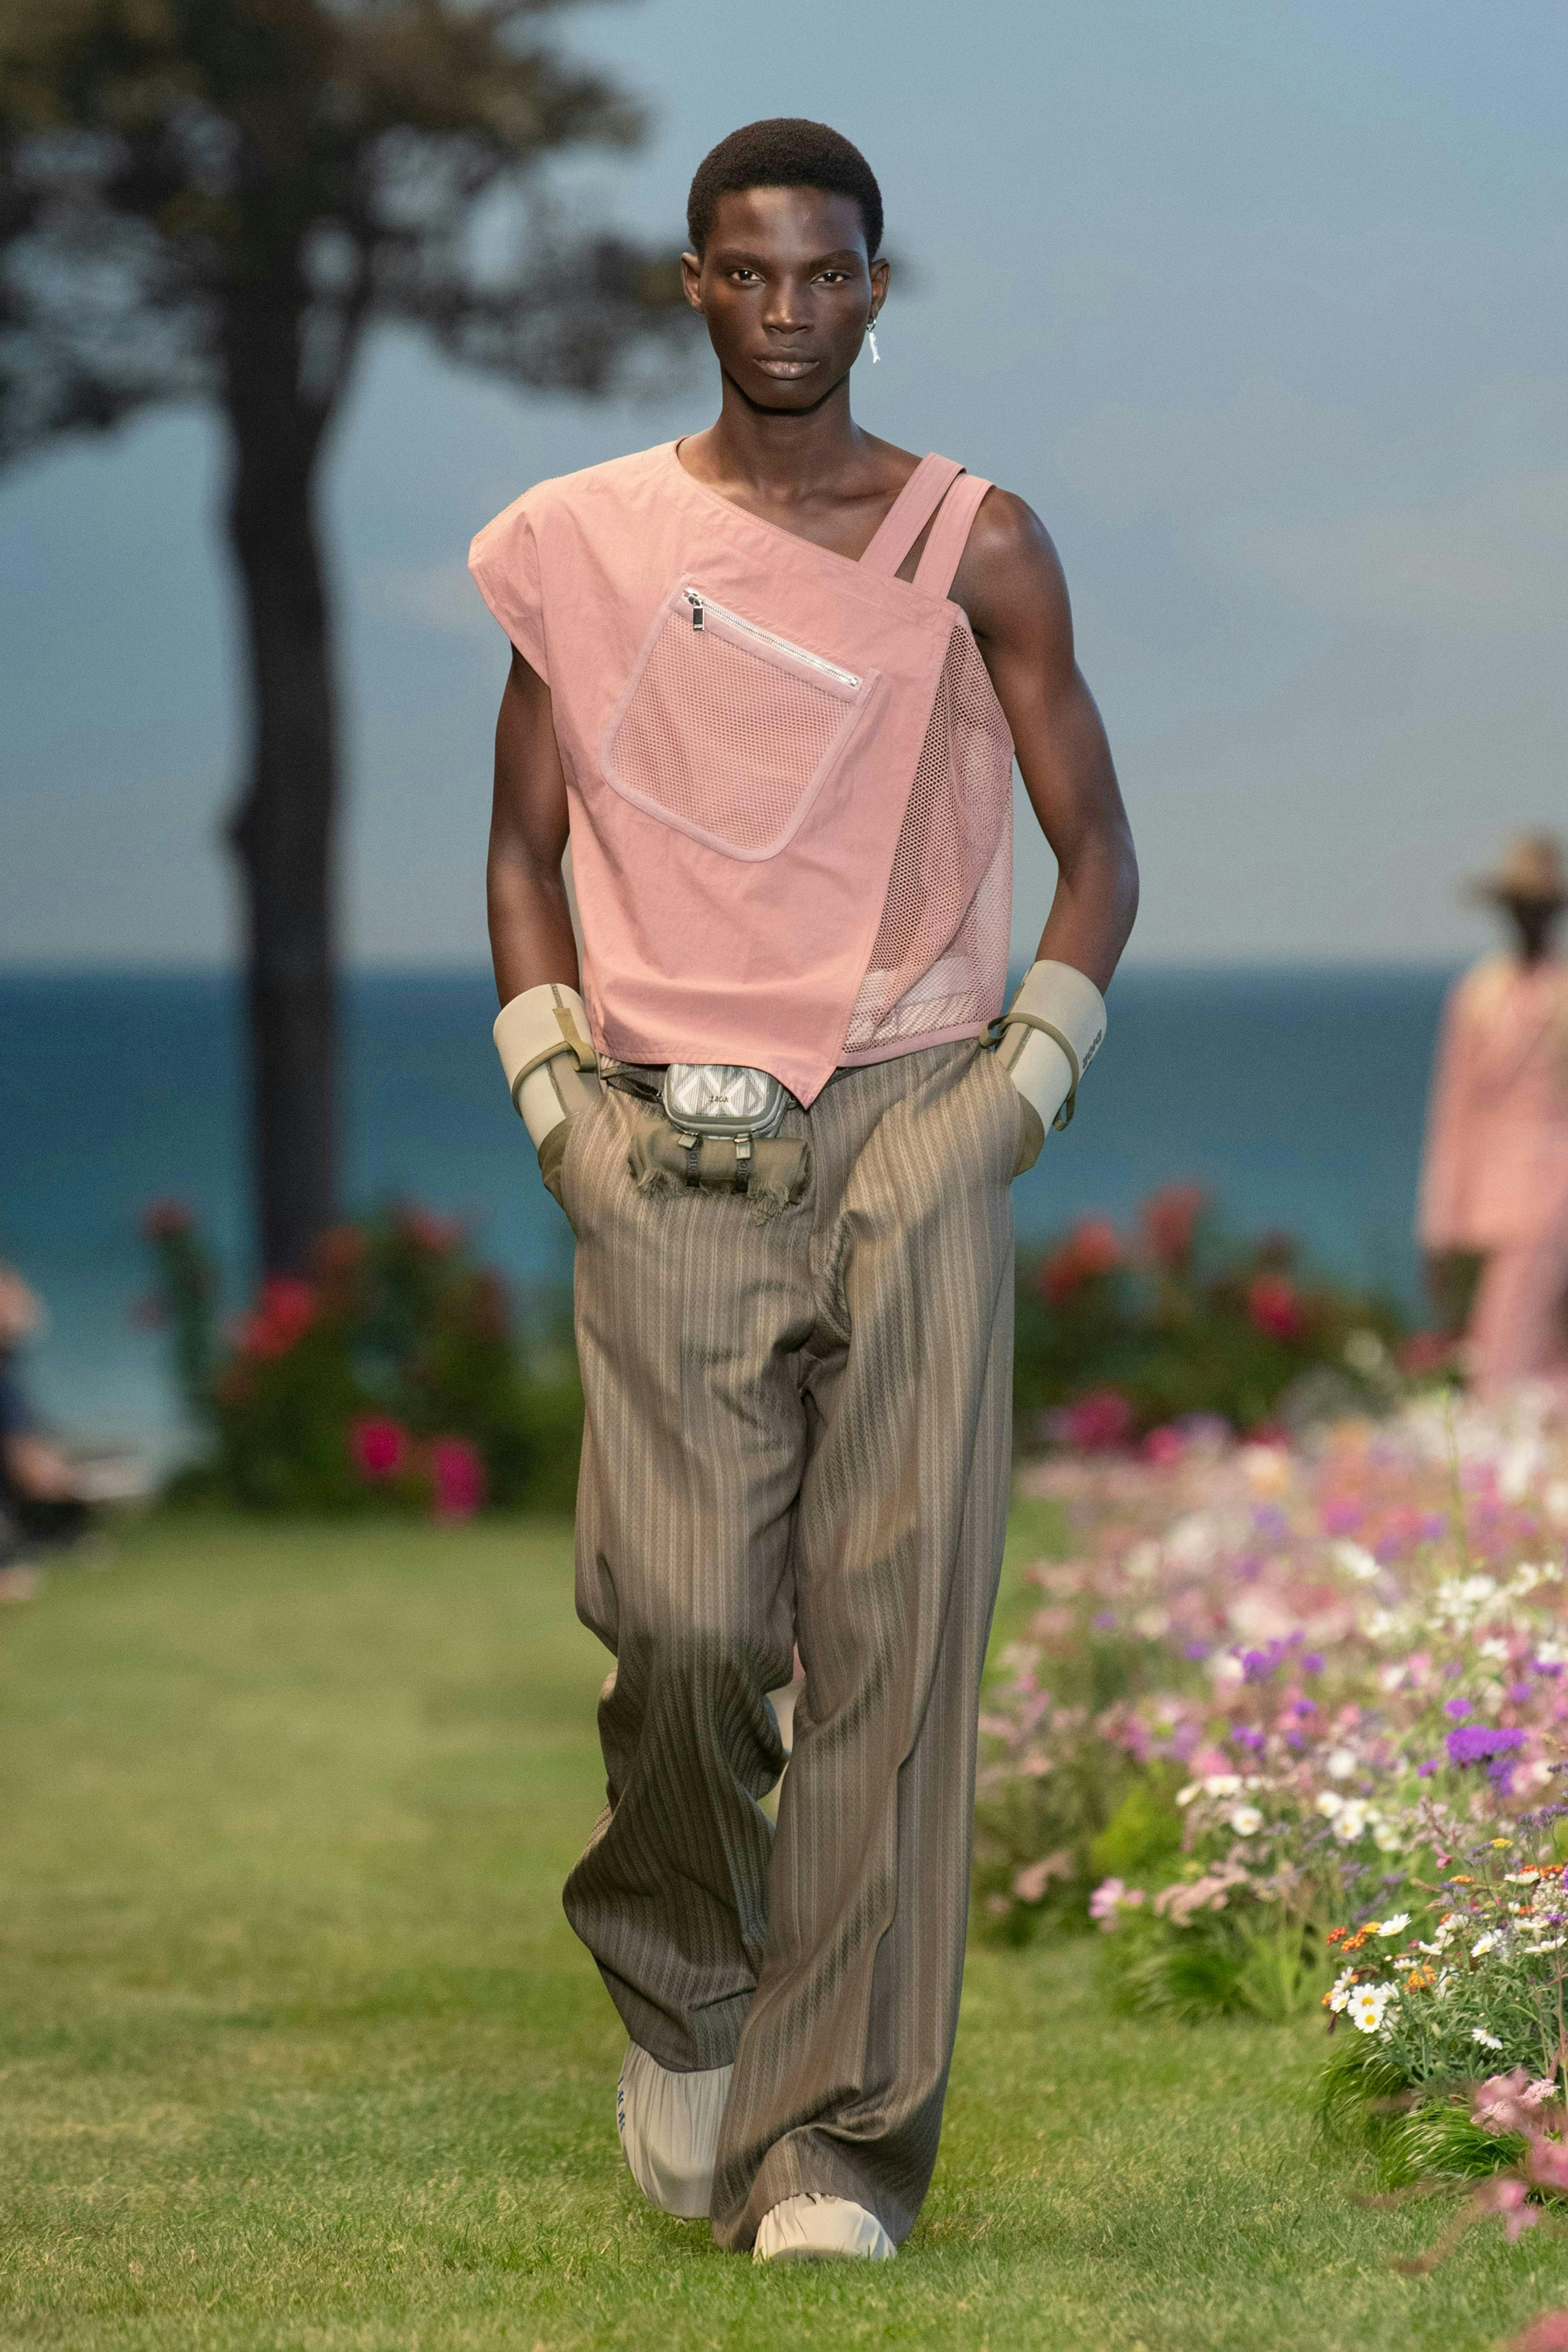 person human clothing apparel grass plant garden outdoors